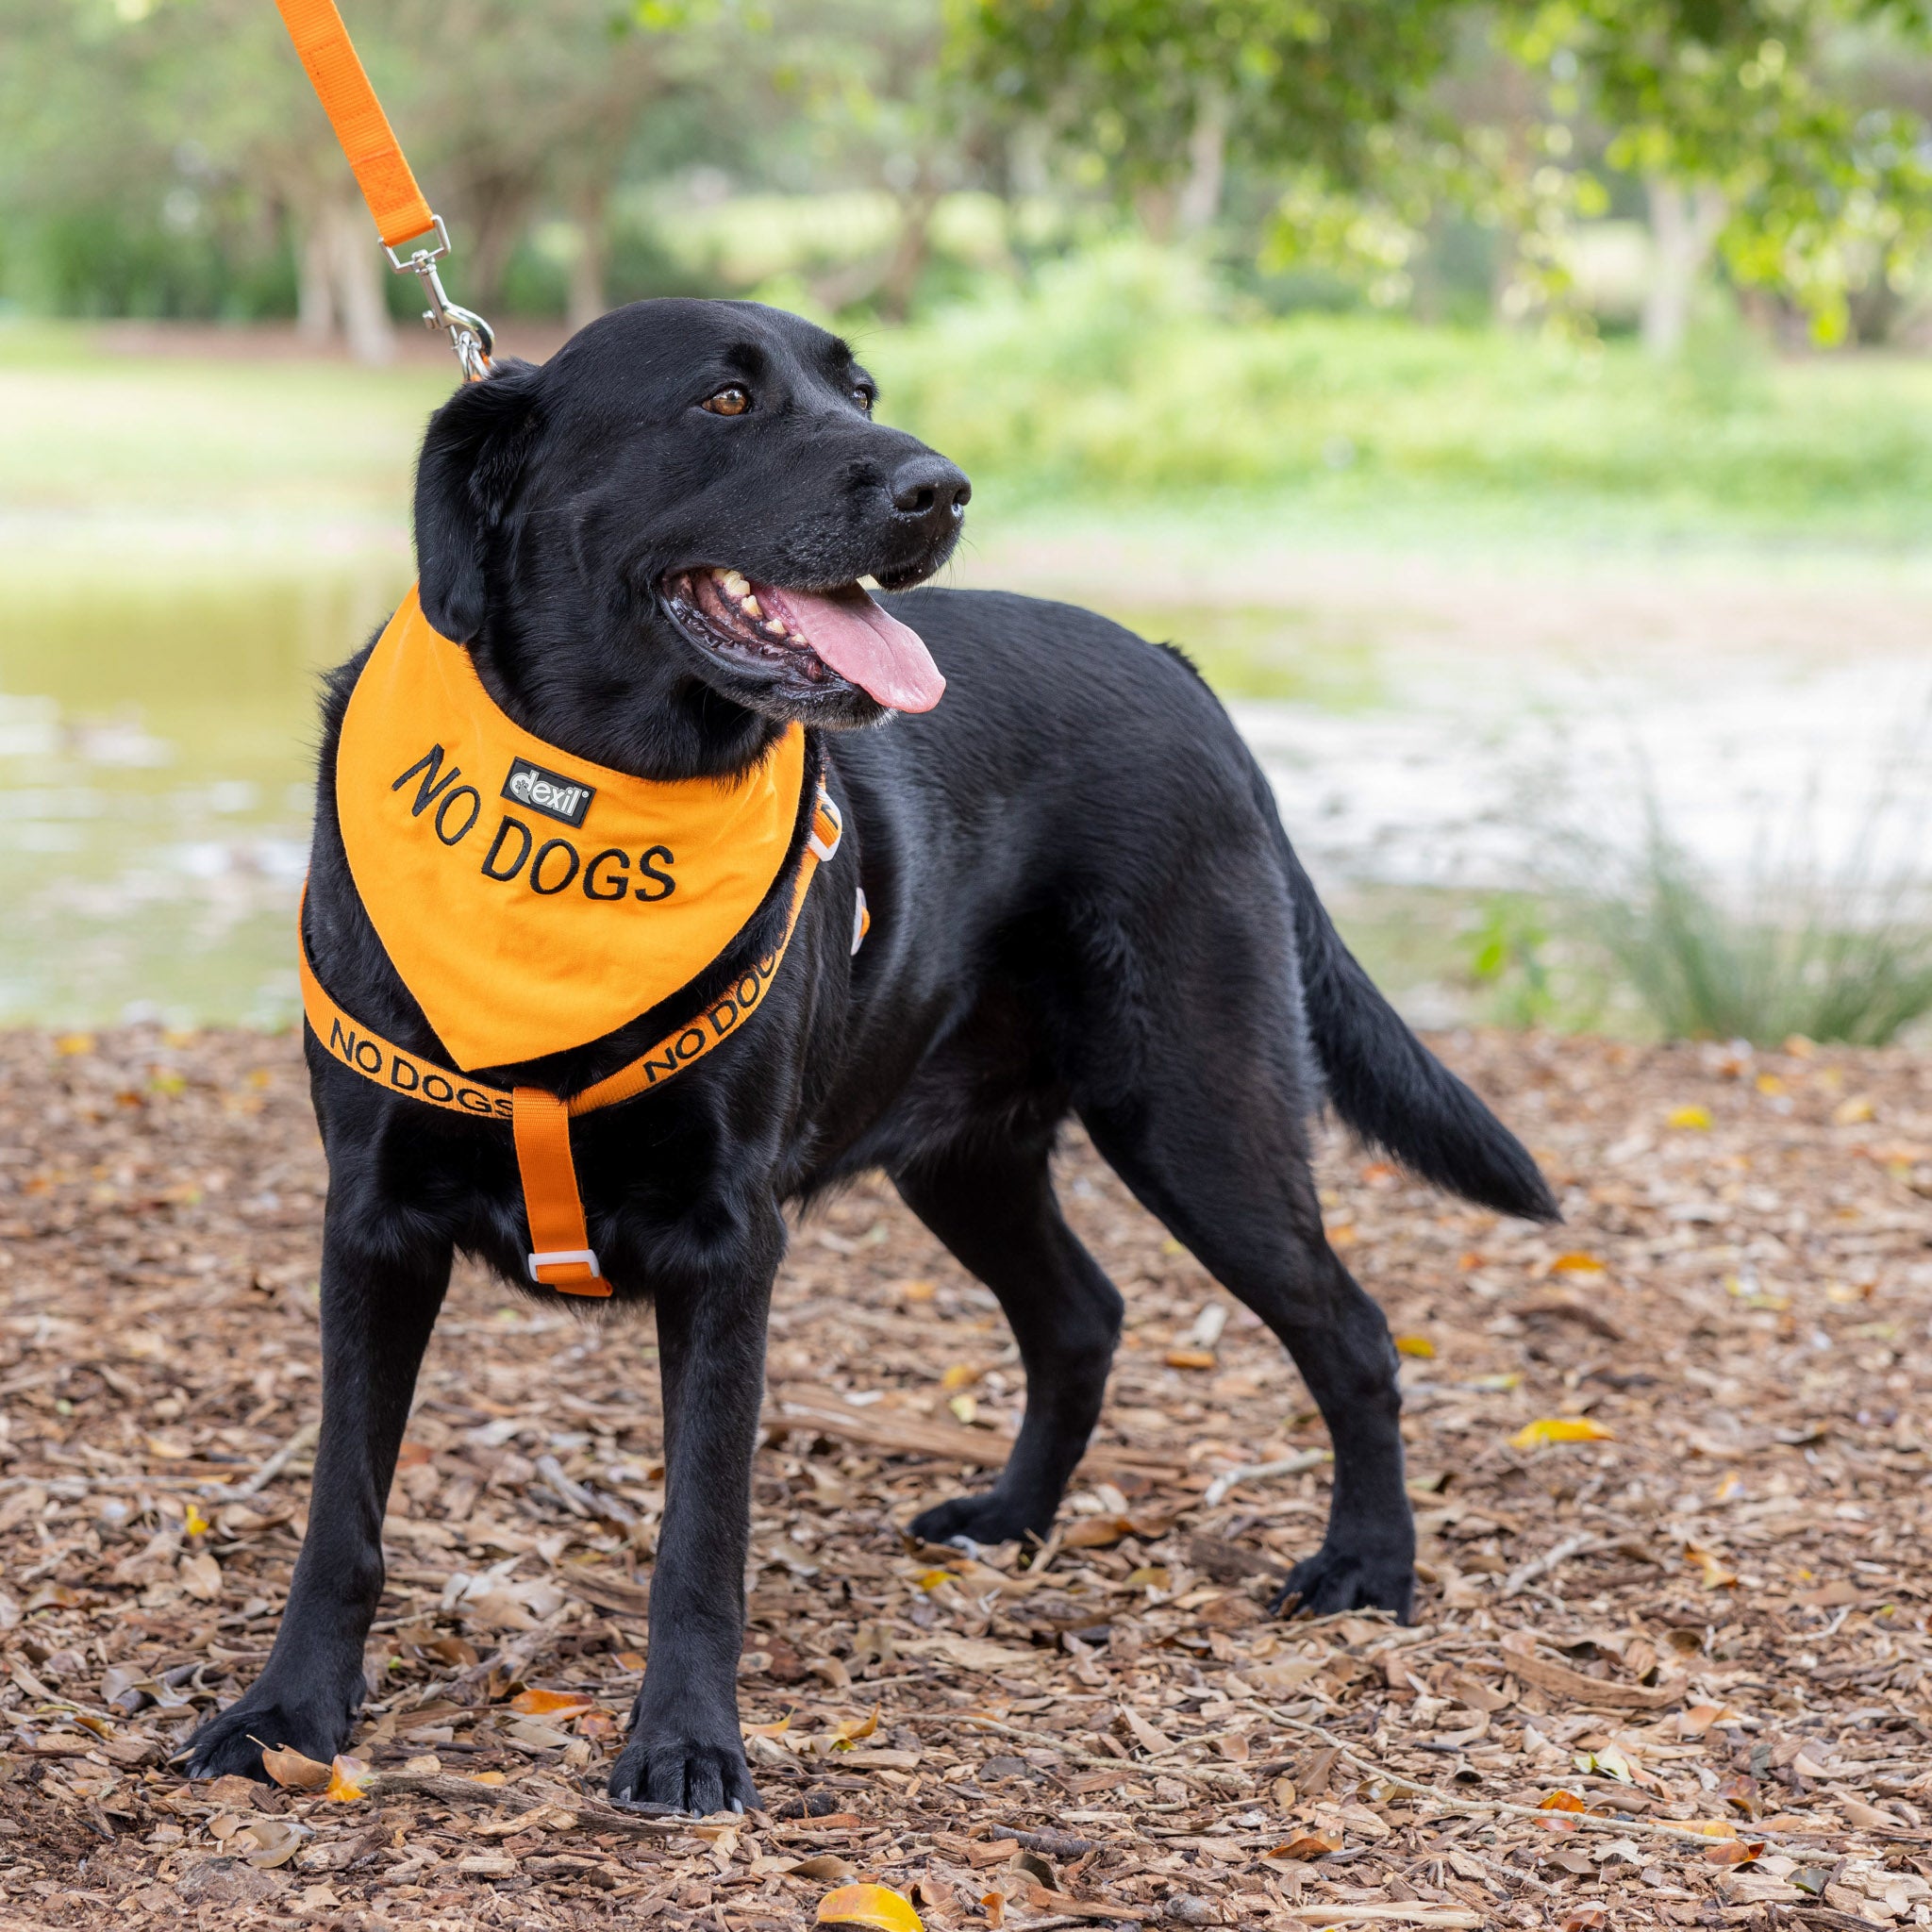 Dexil Friendly Dog Collars Orange NO DOGS L/XL Adjustable Strap Harness